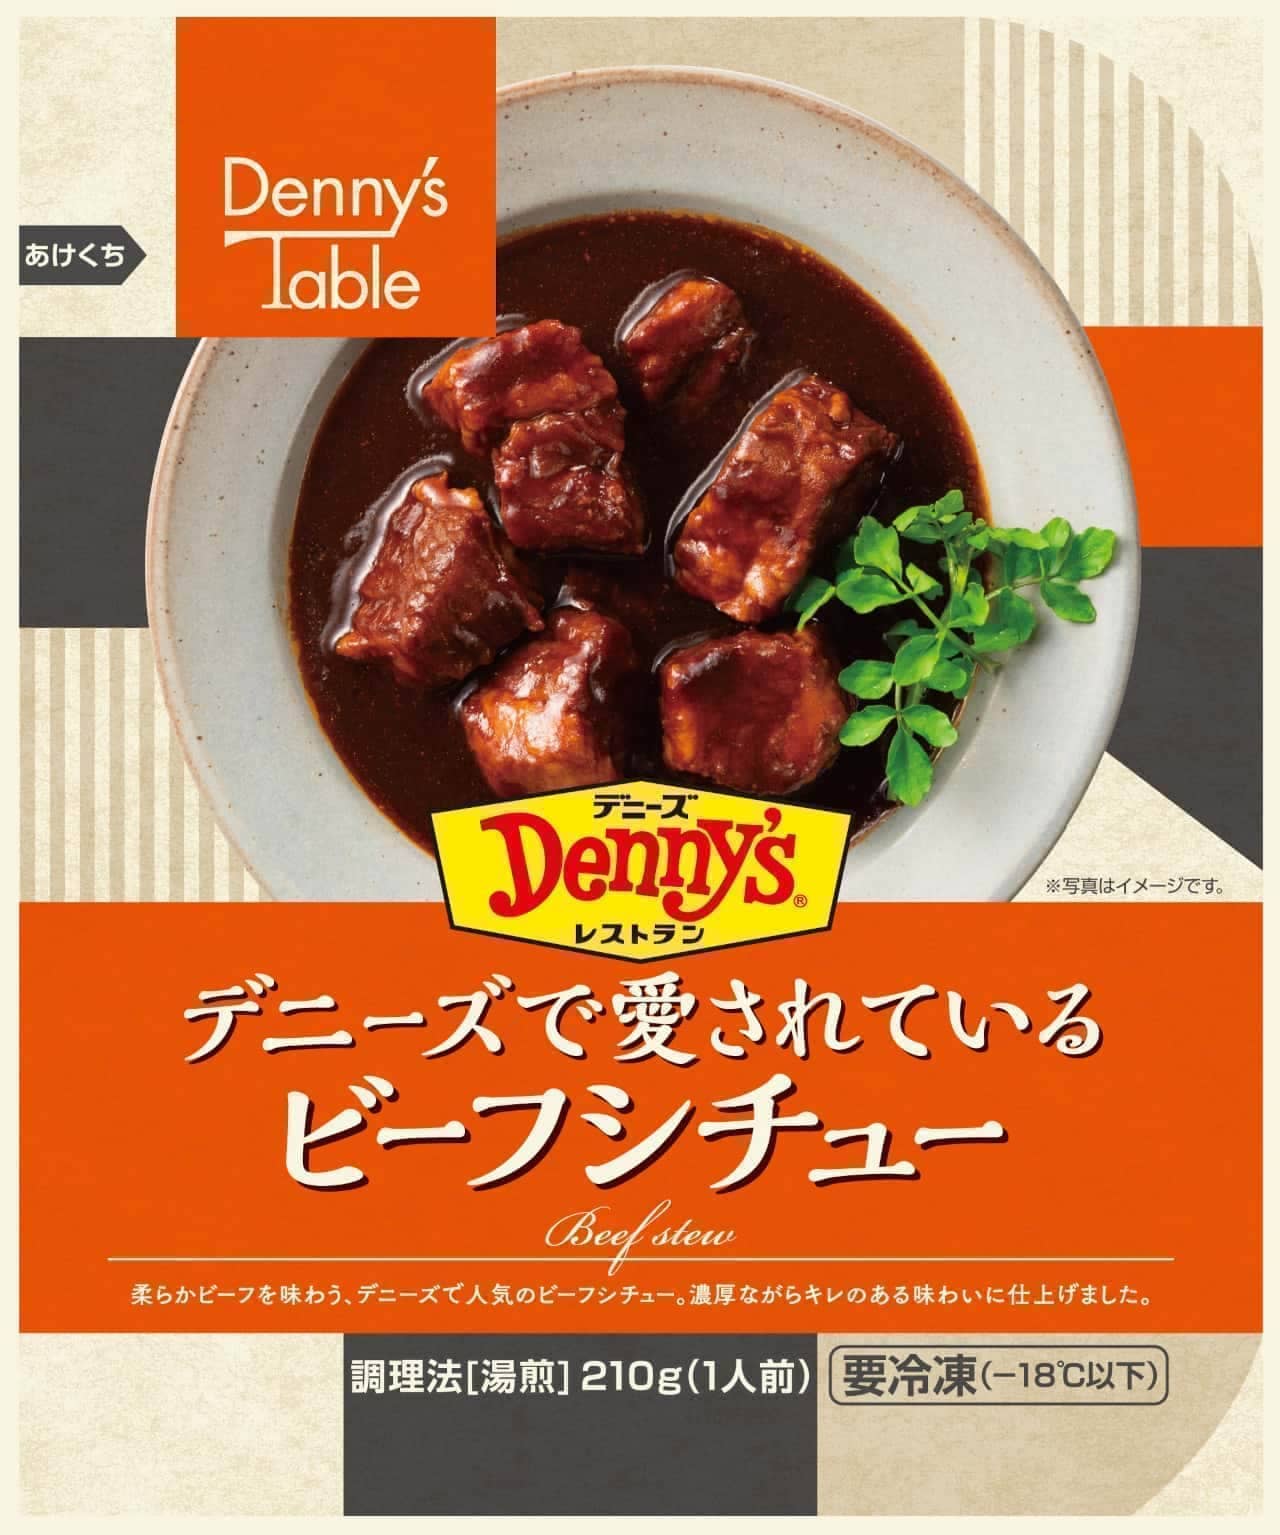 Denny's "Denny's Beloved Beef Stew"